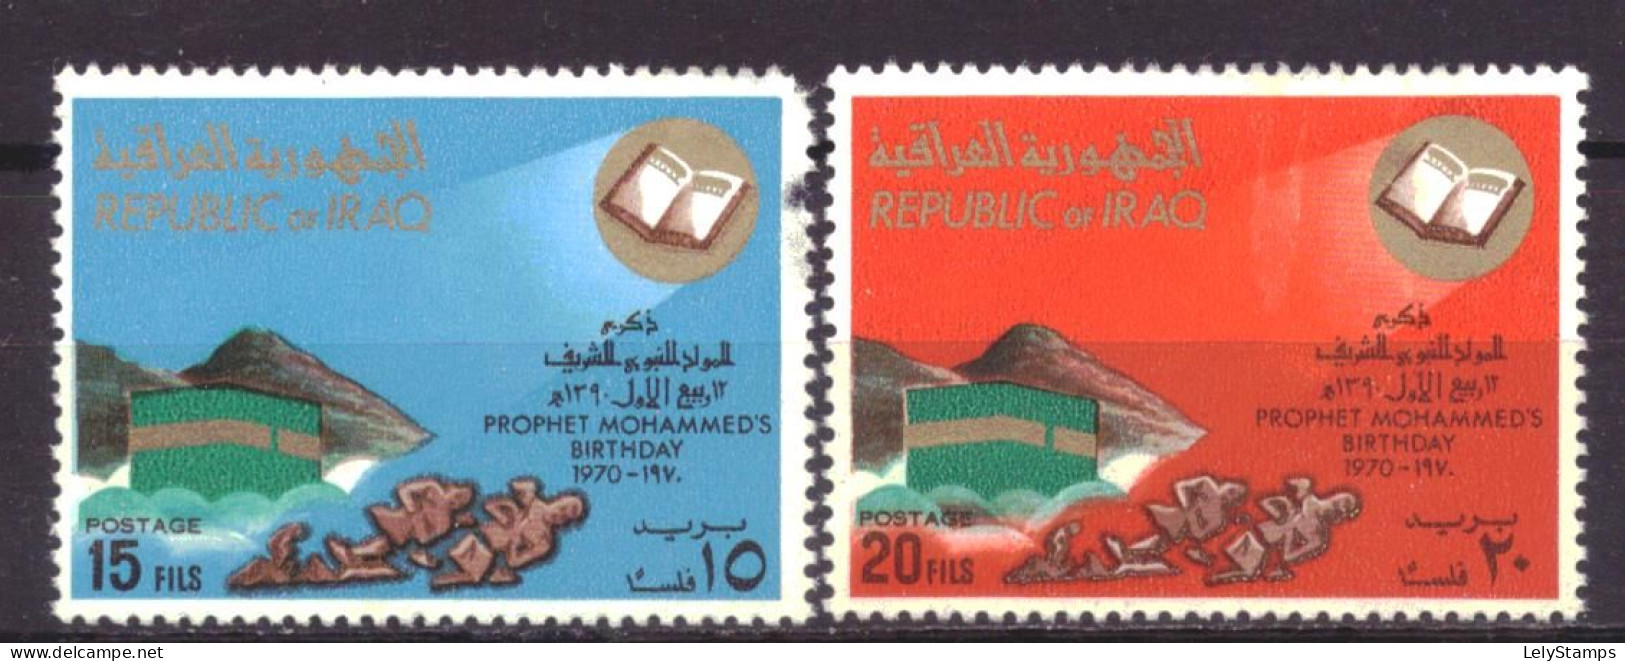 Irak / Iraq 607 & 608 MH * Birthday Mohammed (1970) (B-Choice) - Iraq